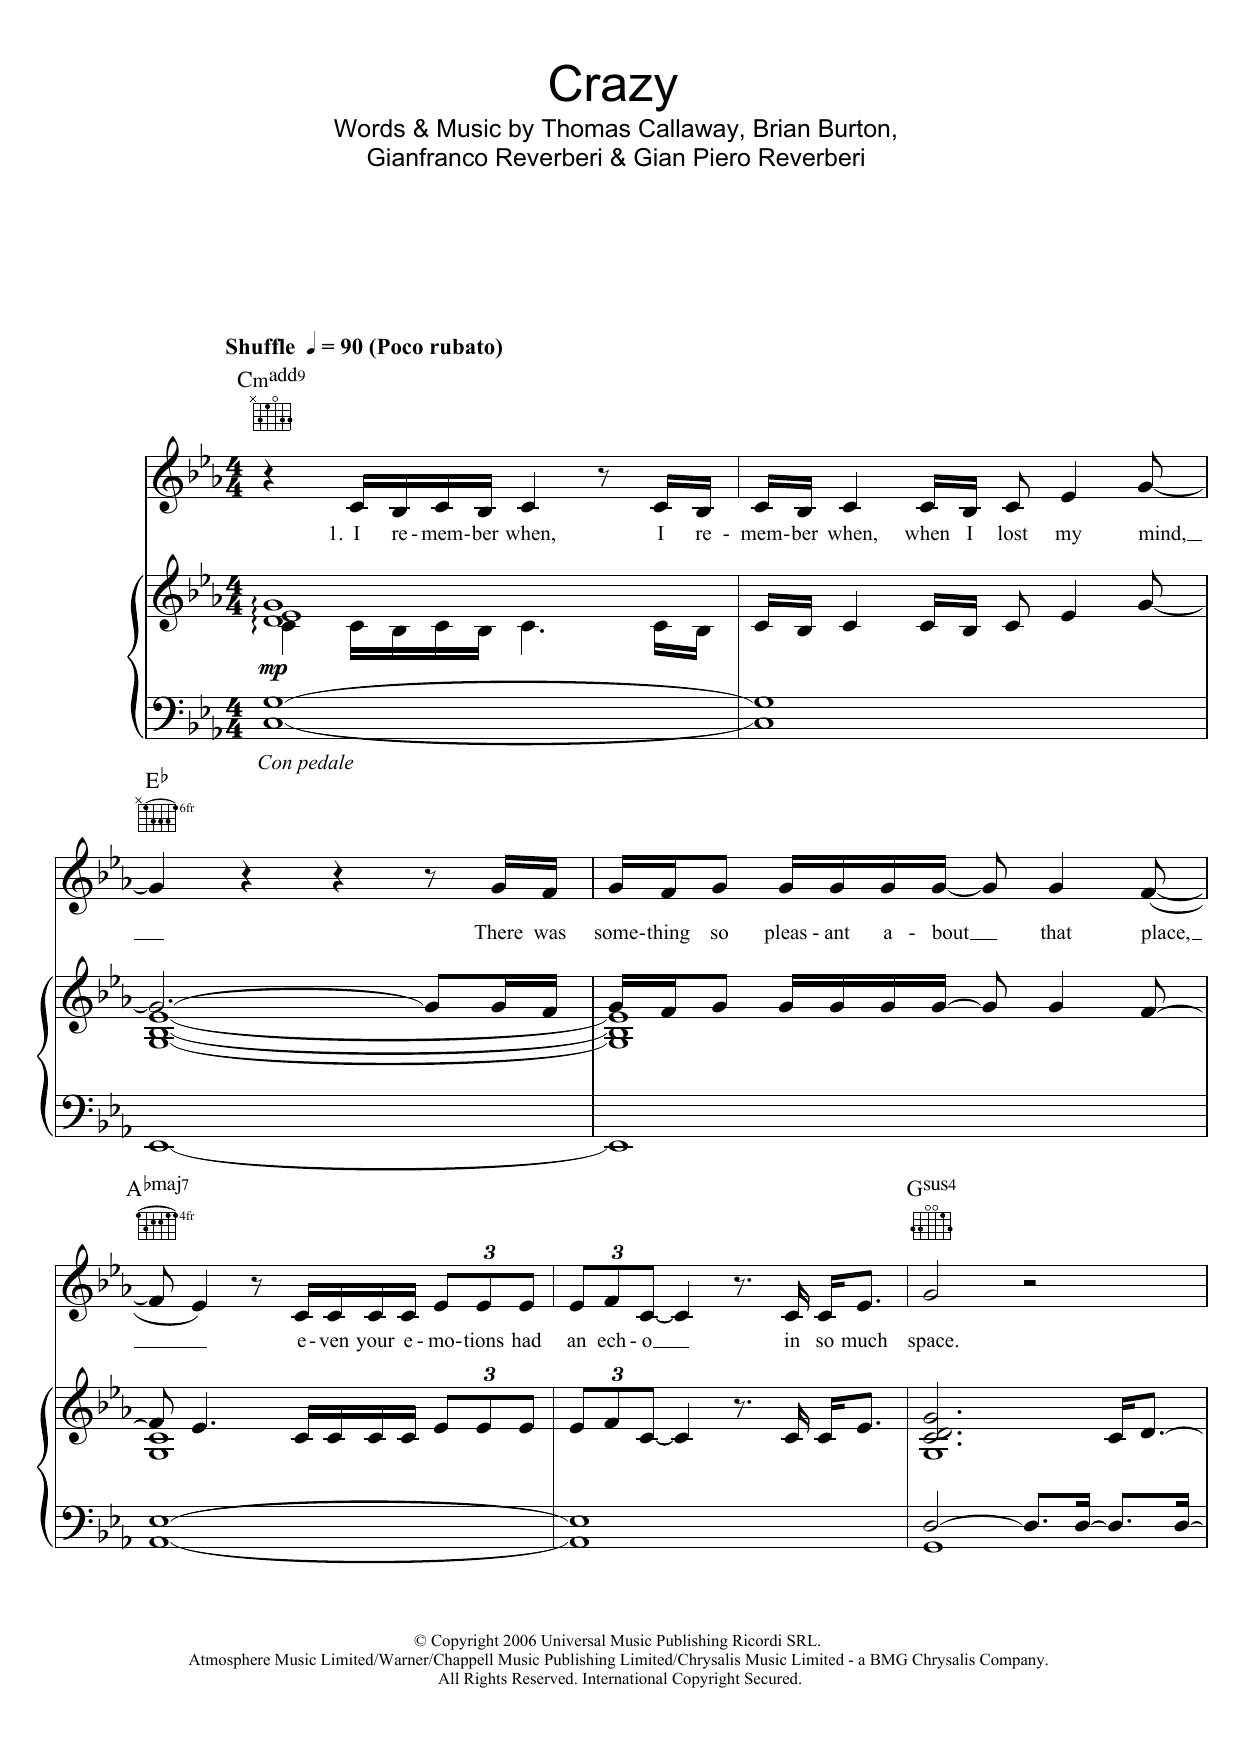 Kate Noonan Crazy Sheet Music Notes & Chords for Ukulele - Download or Print PDF